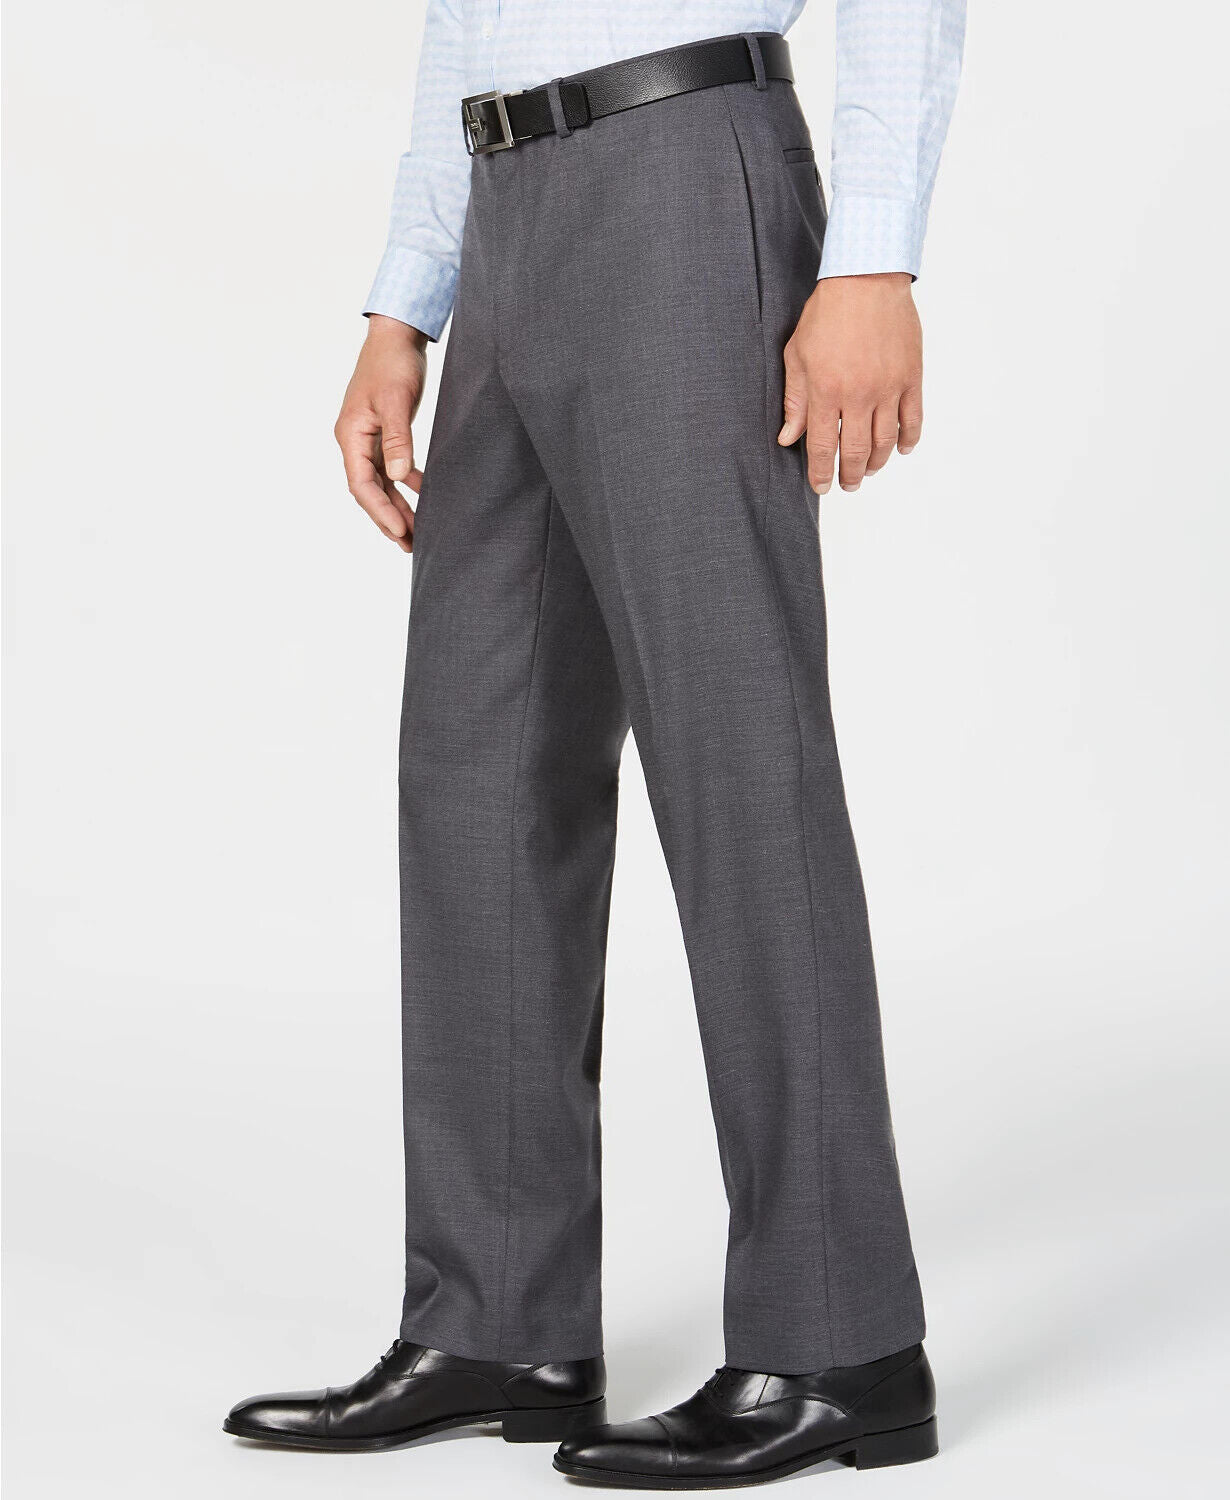 Pantalones de traje Andrew Marc MSRP $148 Tamaño 31W/32L # 30A 317 NUEVO